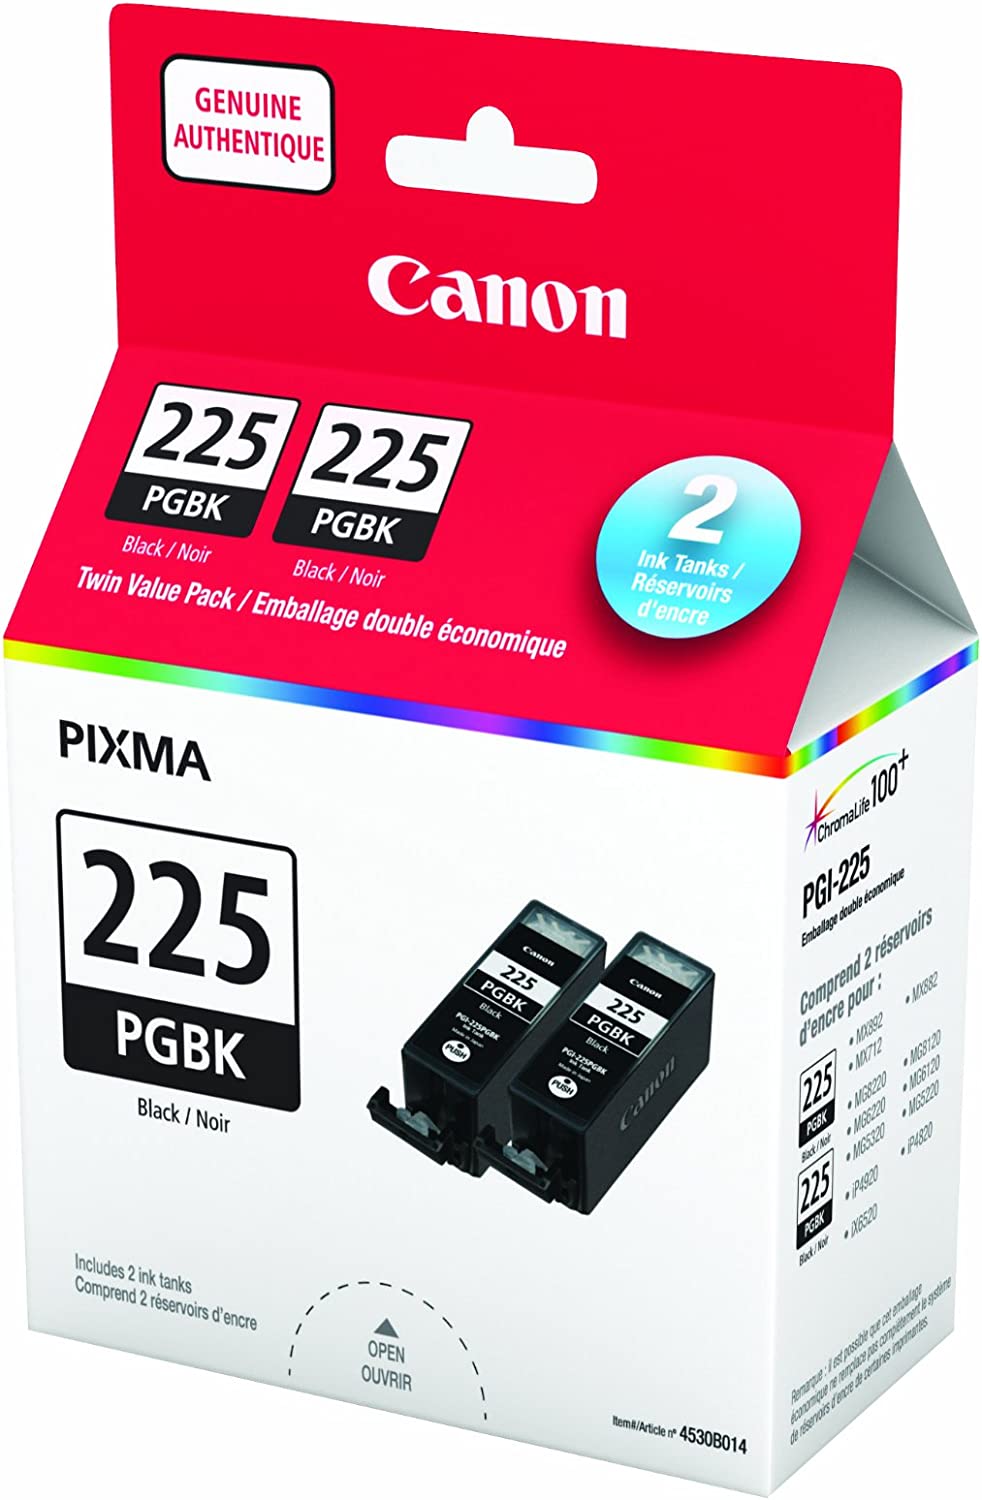 Canon Genuine PGI-225 Black Twin Ink Cartridge Value Pack